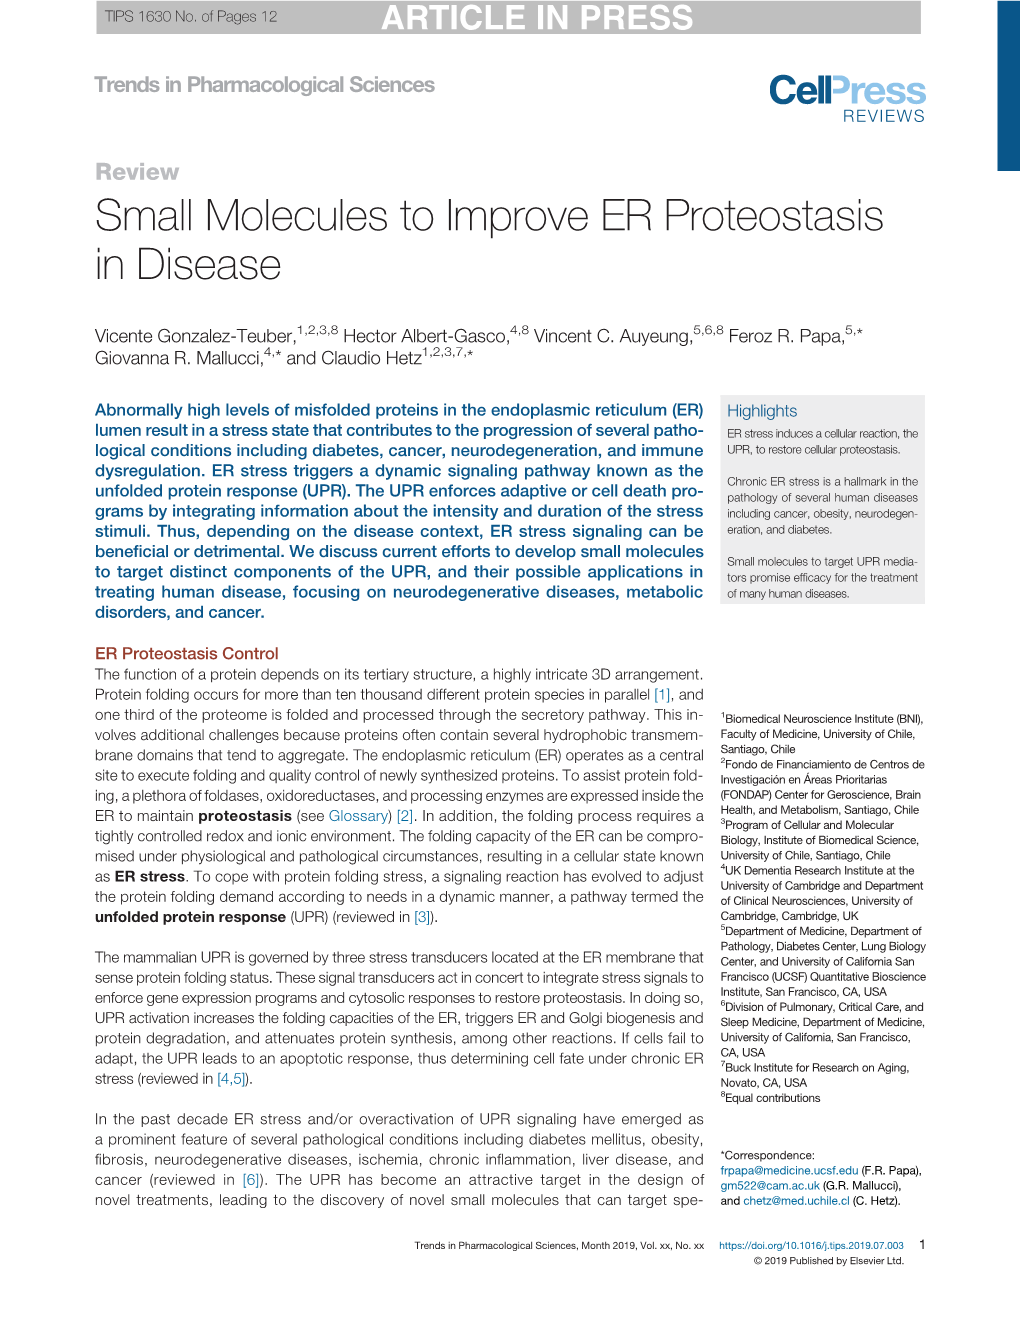 Small Molecules to Improve ER Proteostasis in Disease